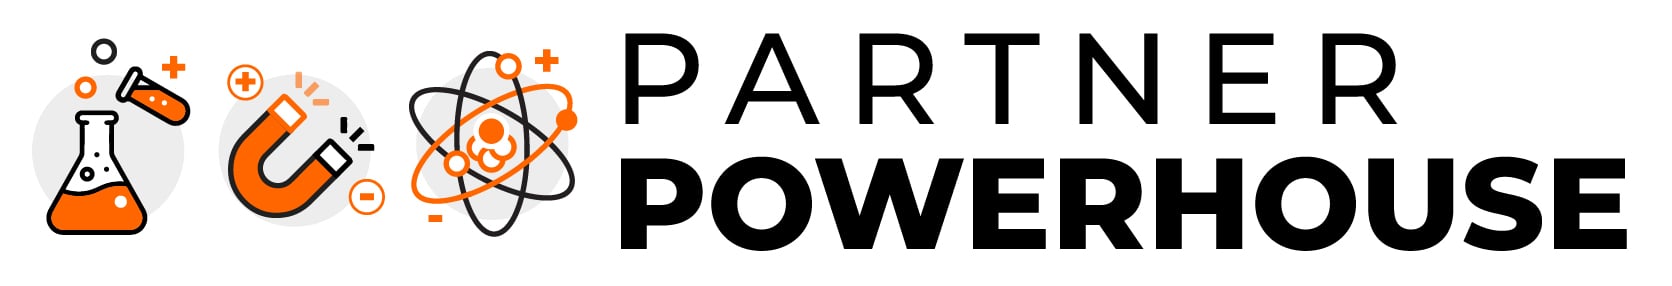 KARE Partner Powerhouse(2)